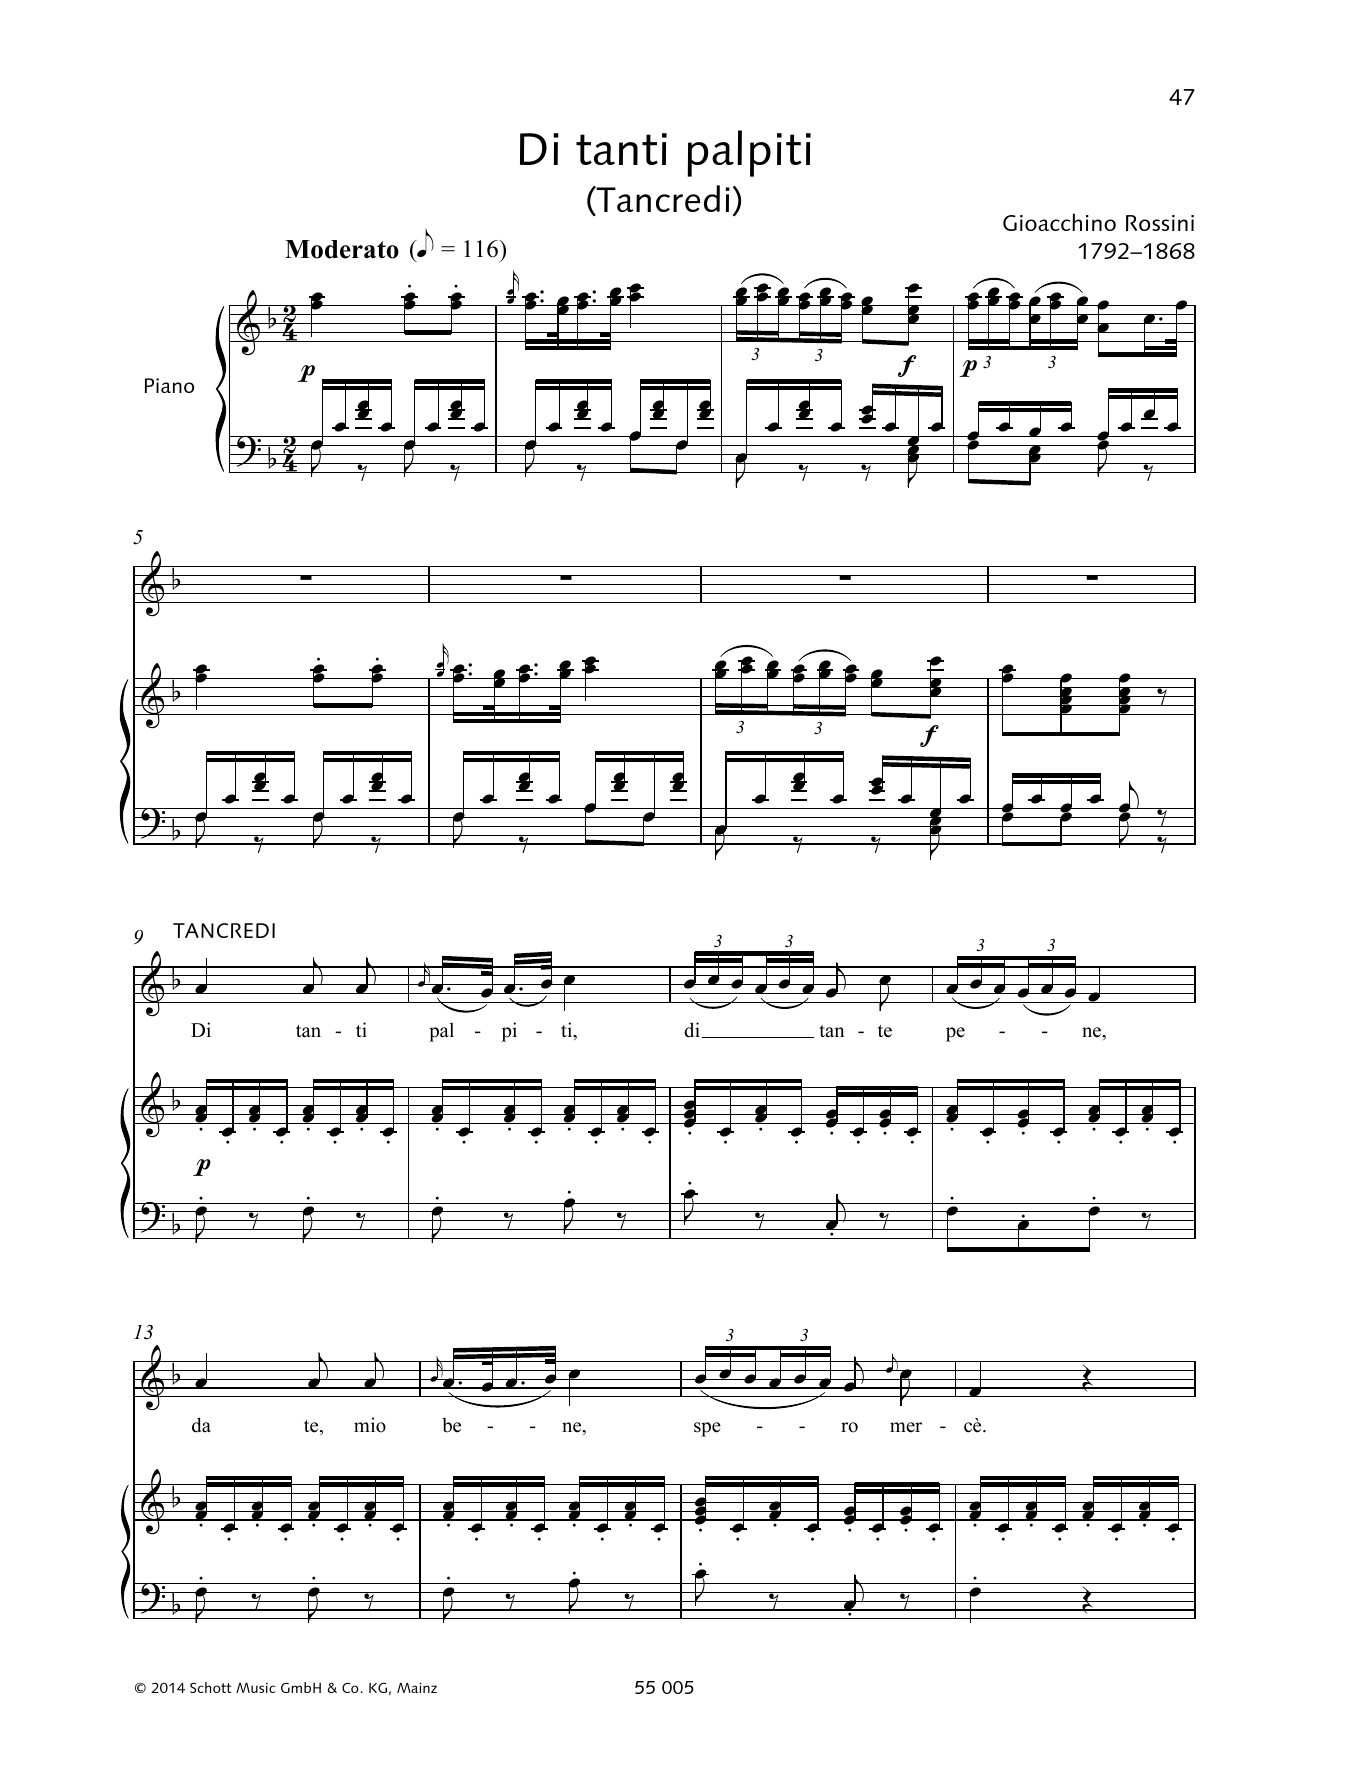 Francesca Licciarda Di tanti palpiti Sheet Music Notes & Chords for Piano & Vocal - Download or Print PDF